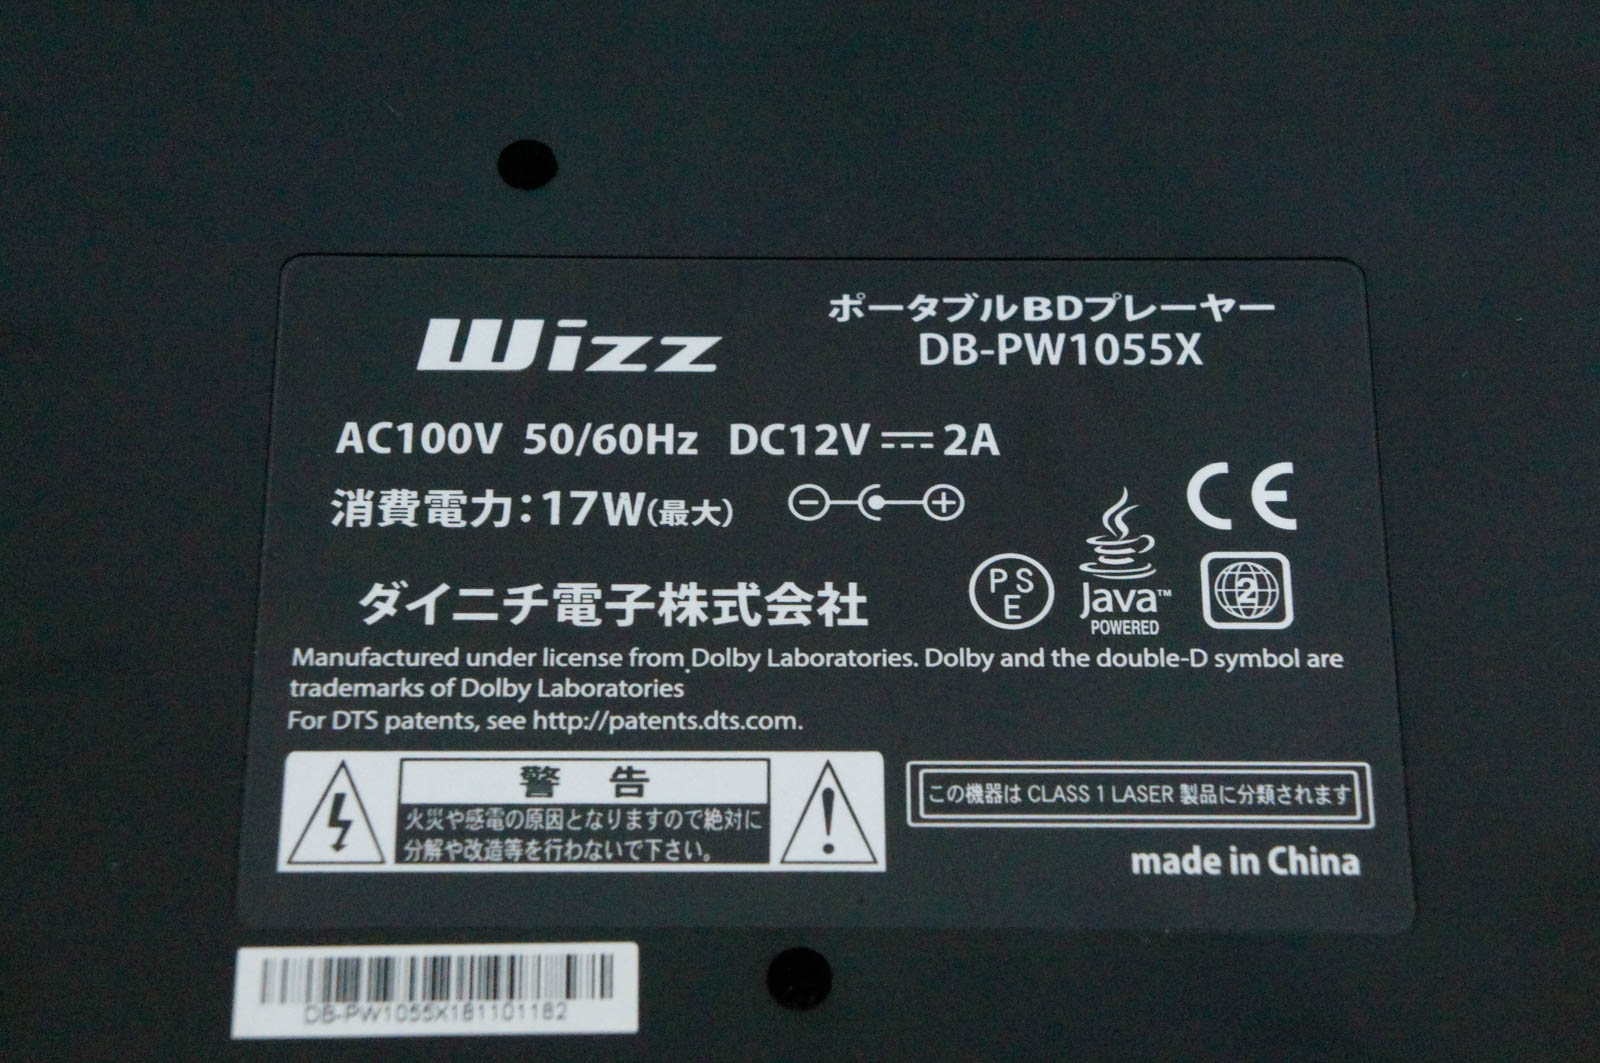 Wizz DB-PW1055X 10.1インチポータブルブルーレイディスク/ DVDプレーヤー